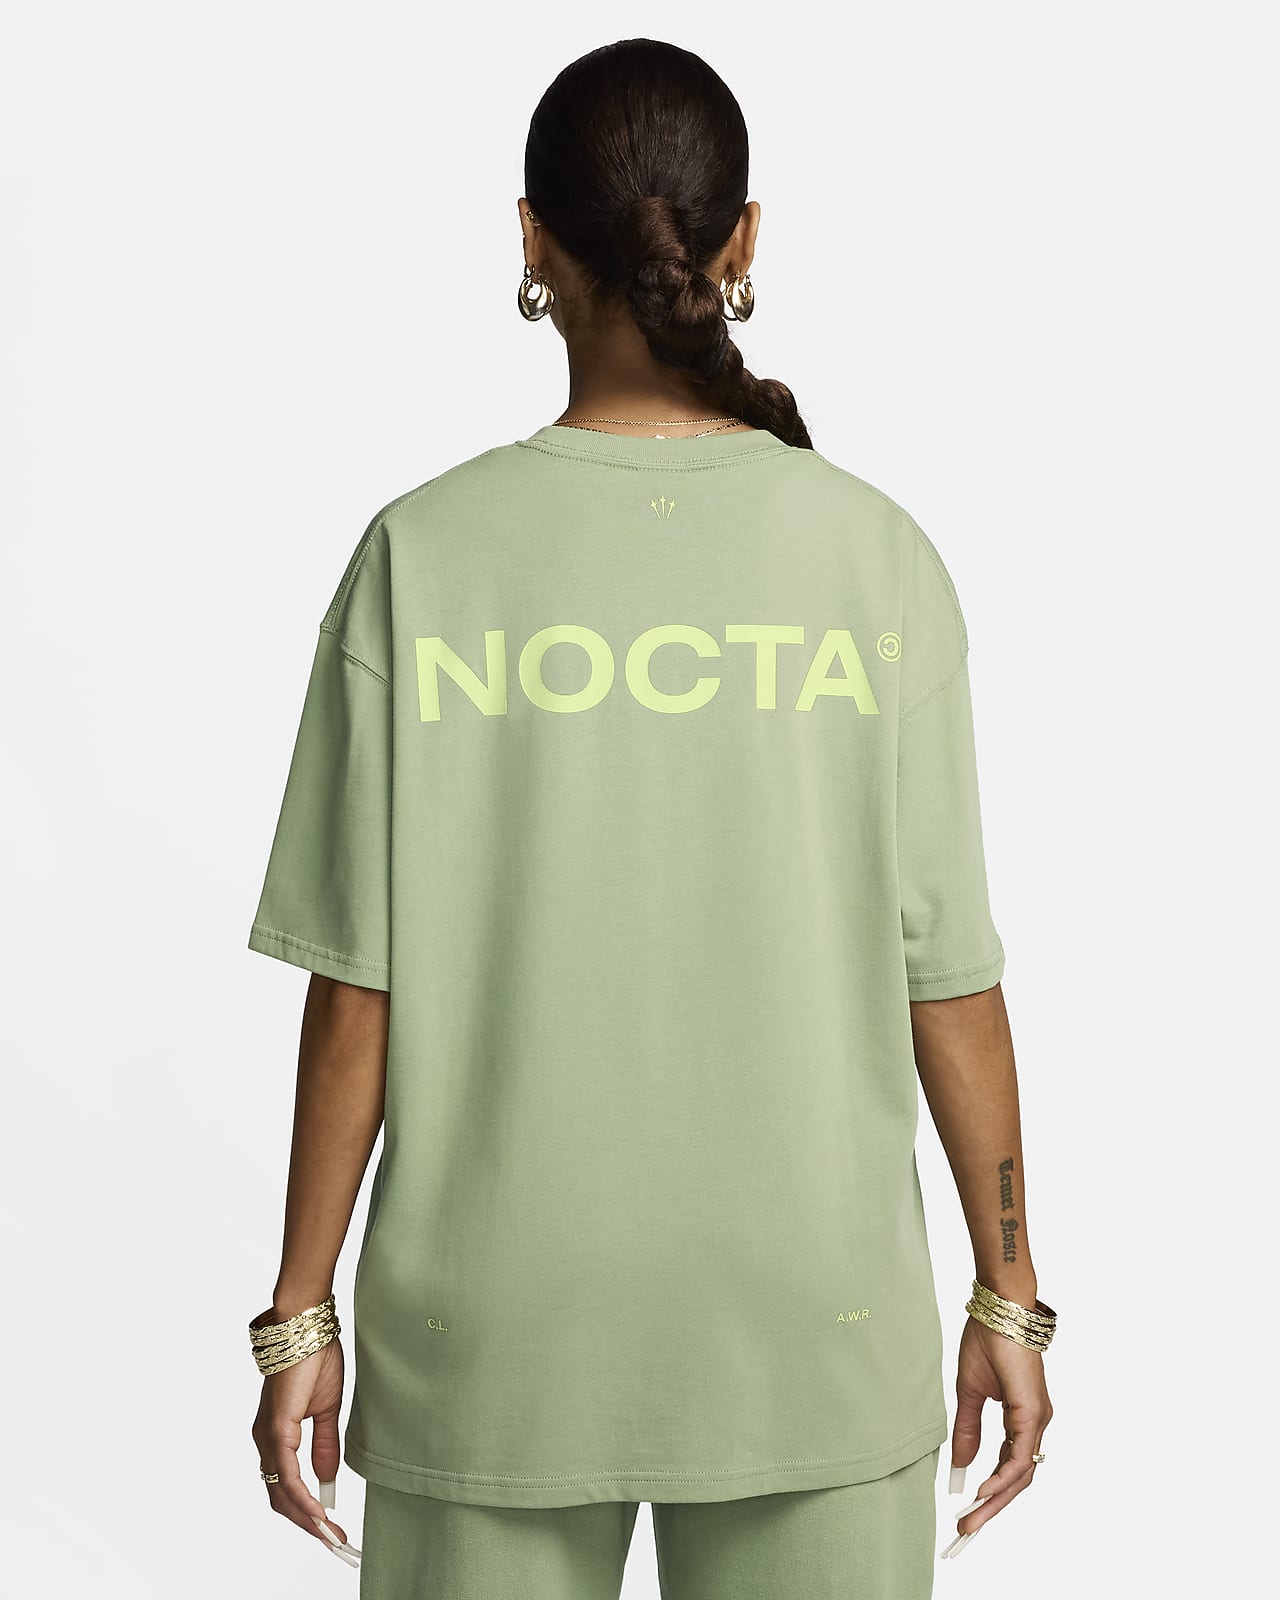 NOCTA グラフィック Tシャツ